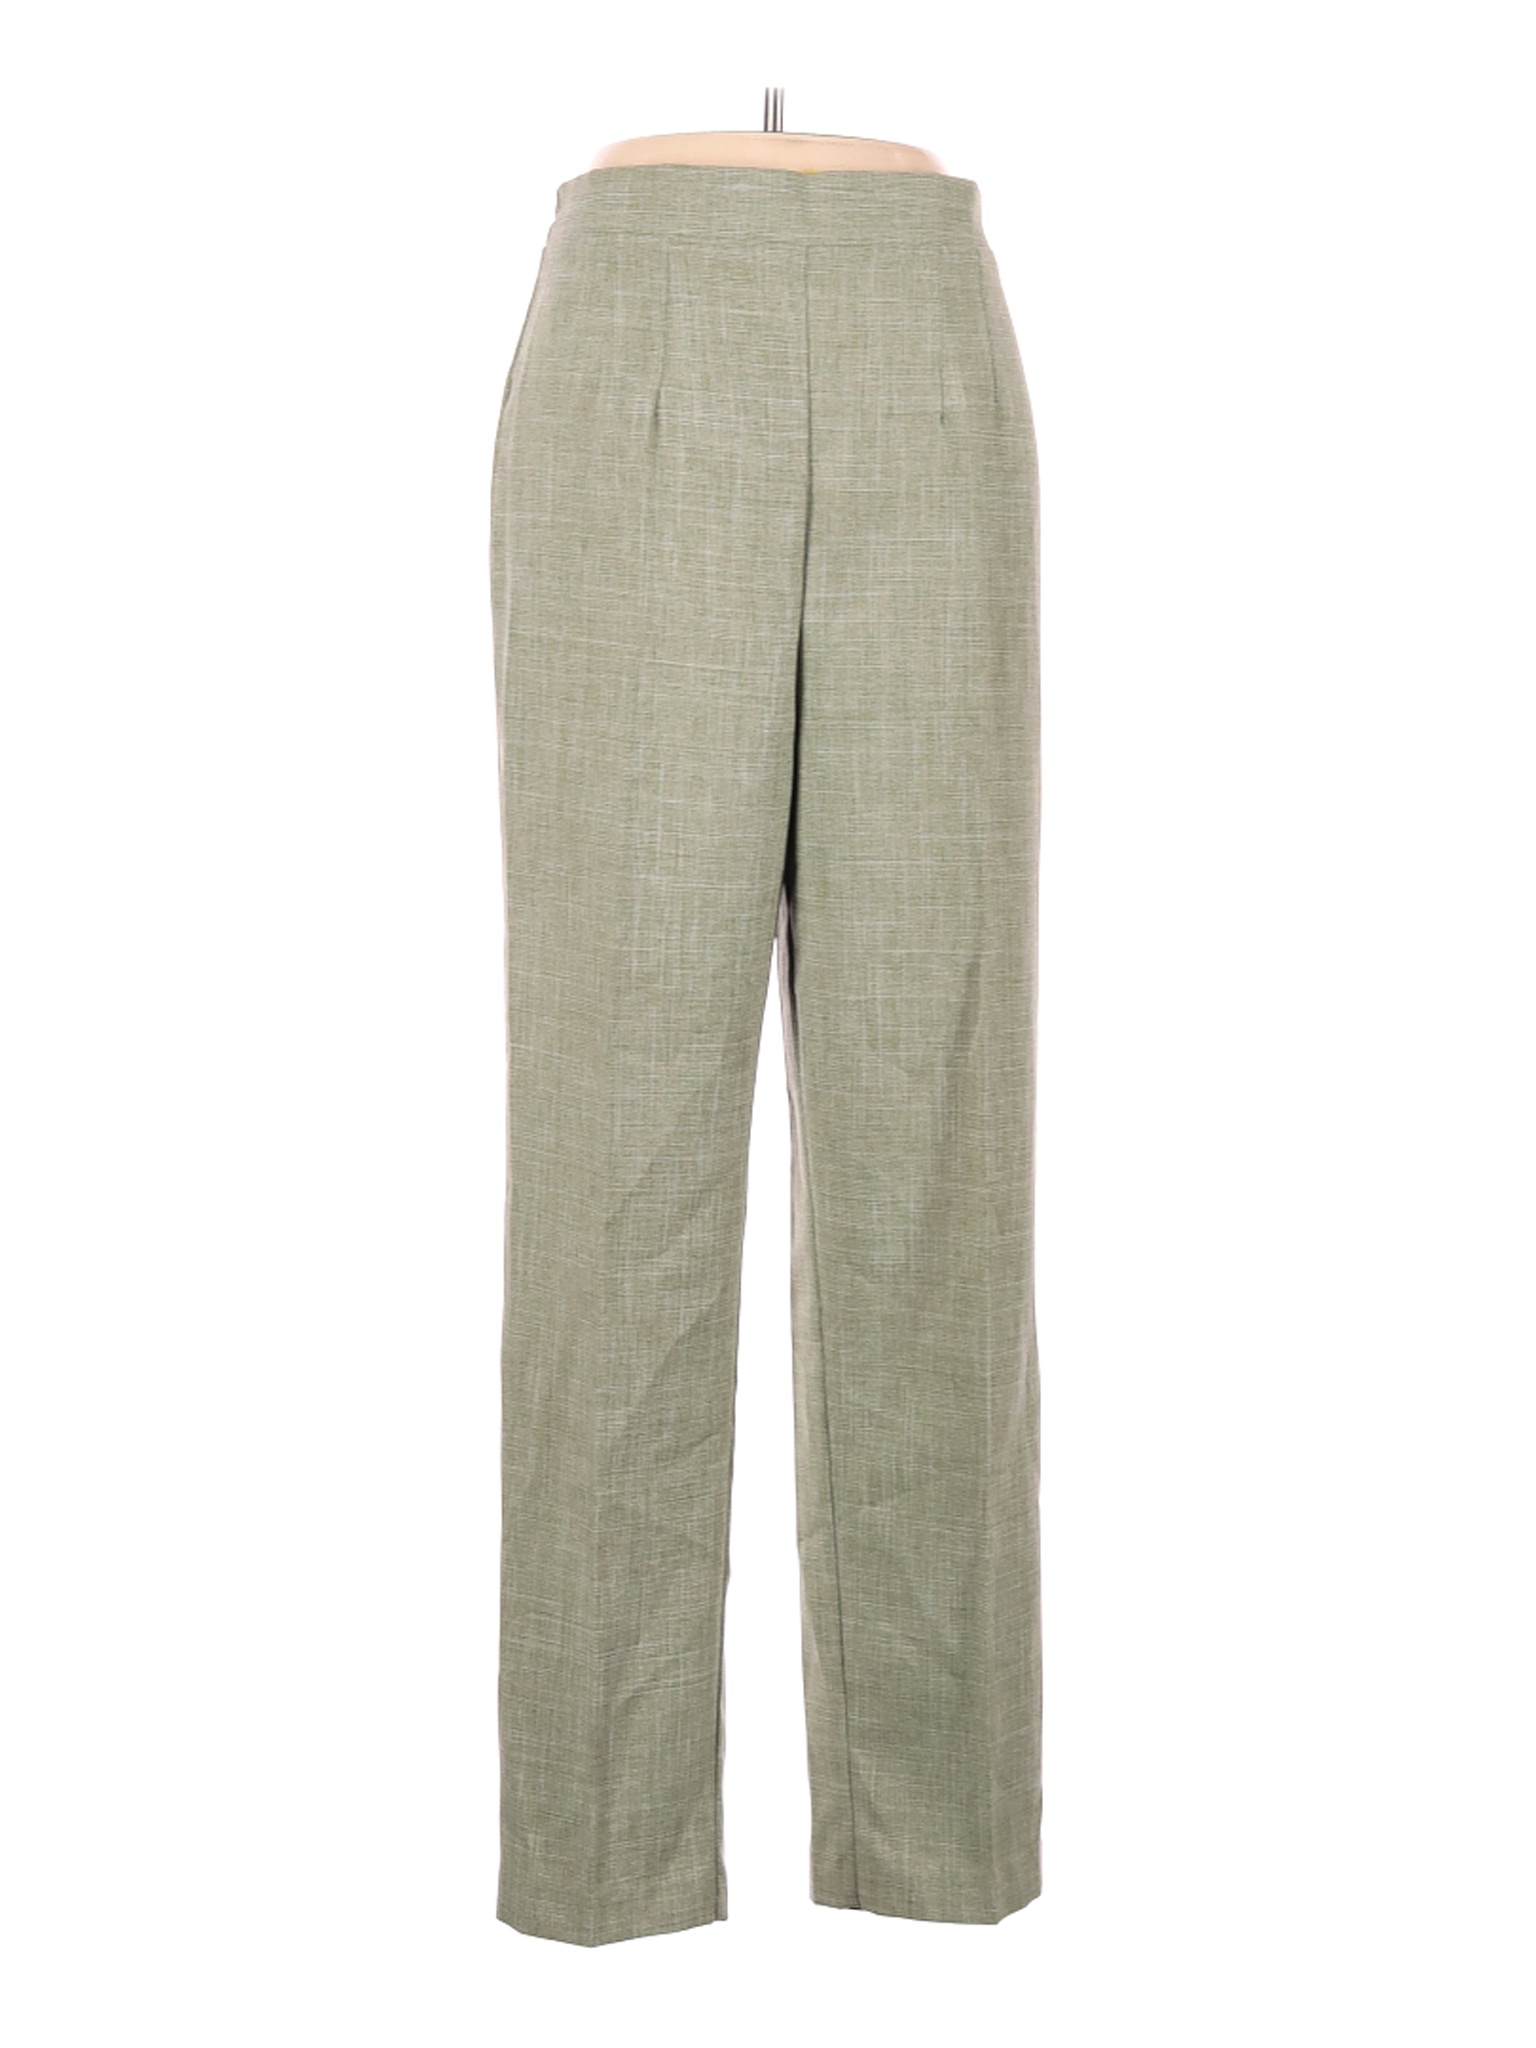 Unbranded Women Green Casual Pants 8 Petites | eBay